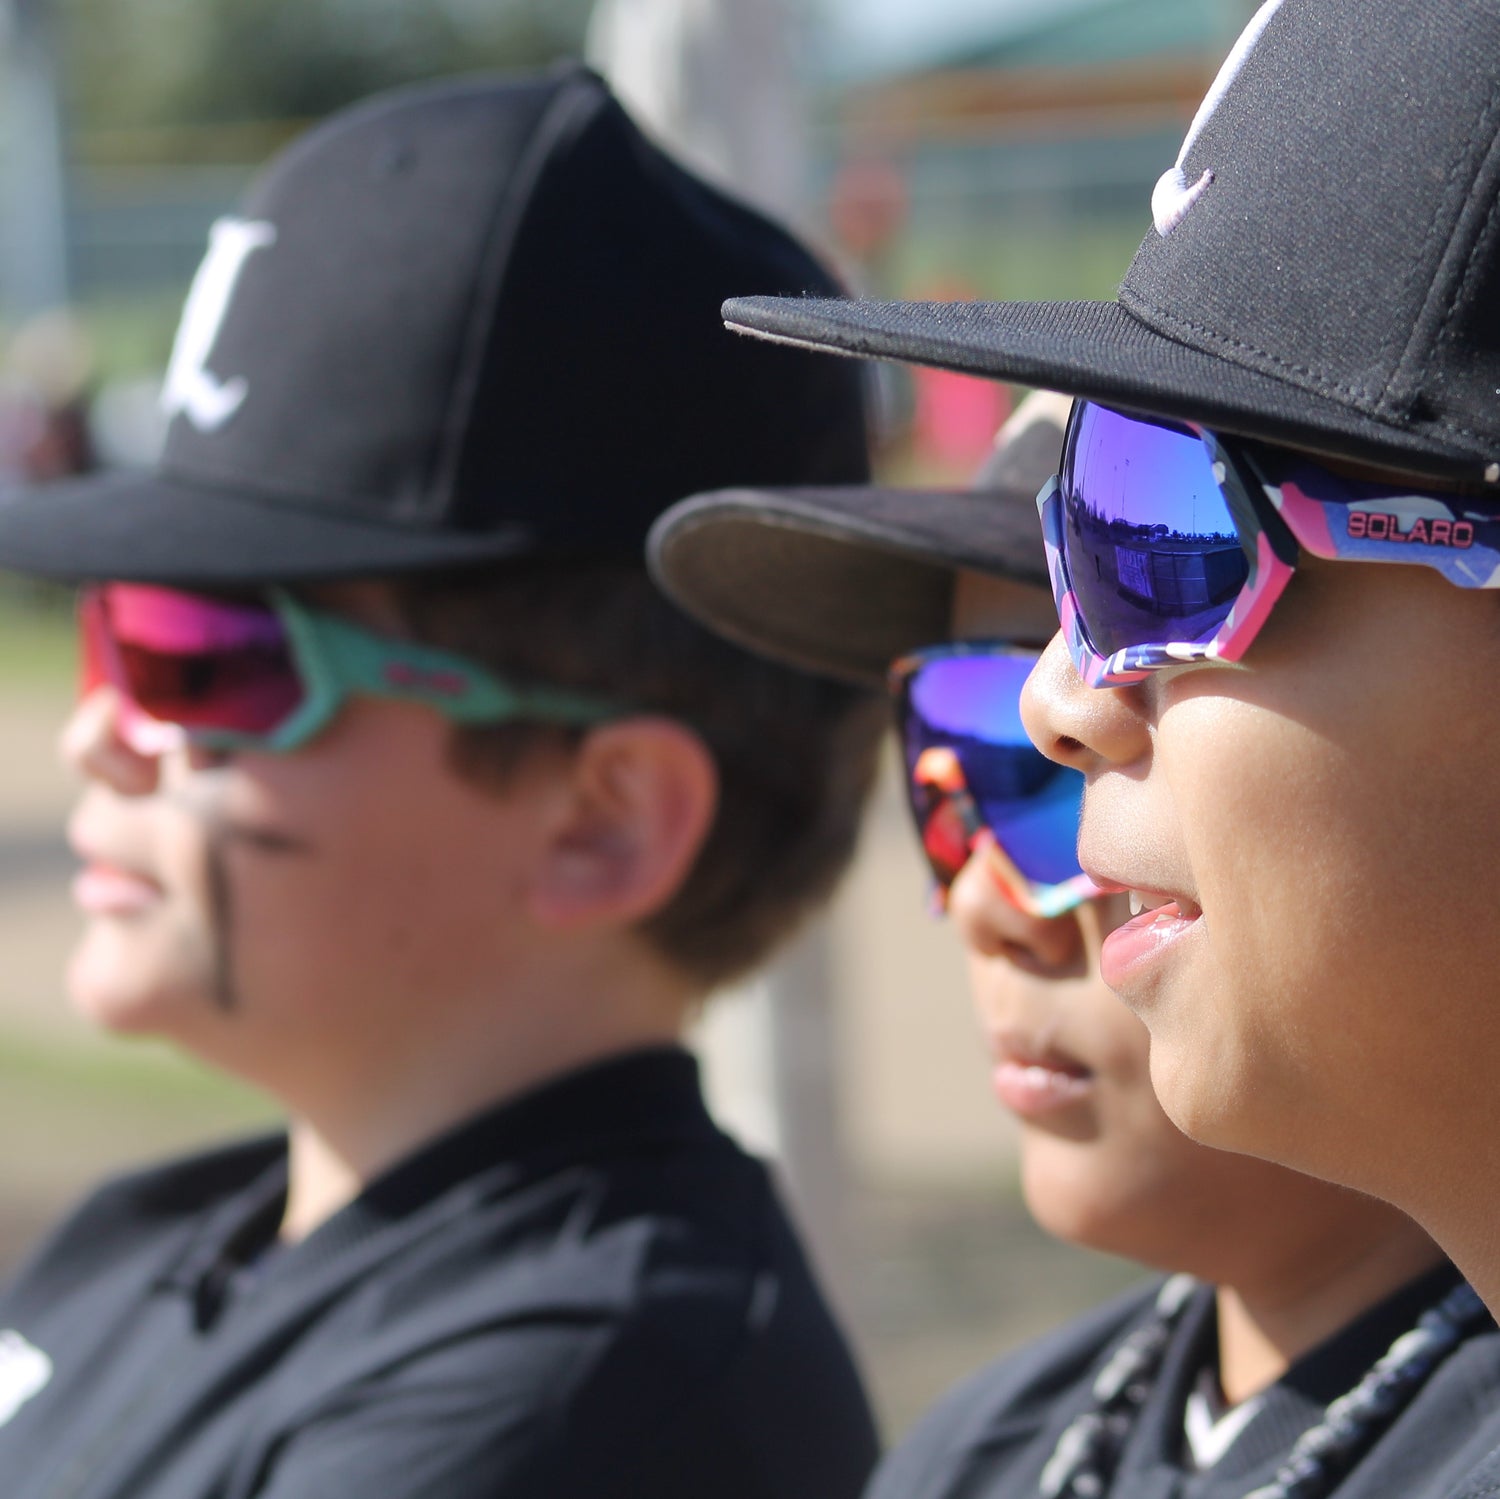 The Best Oakley Baseball Sunglasses